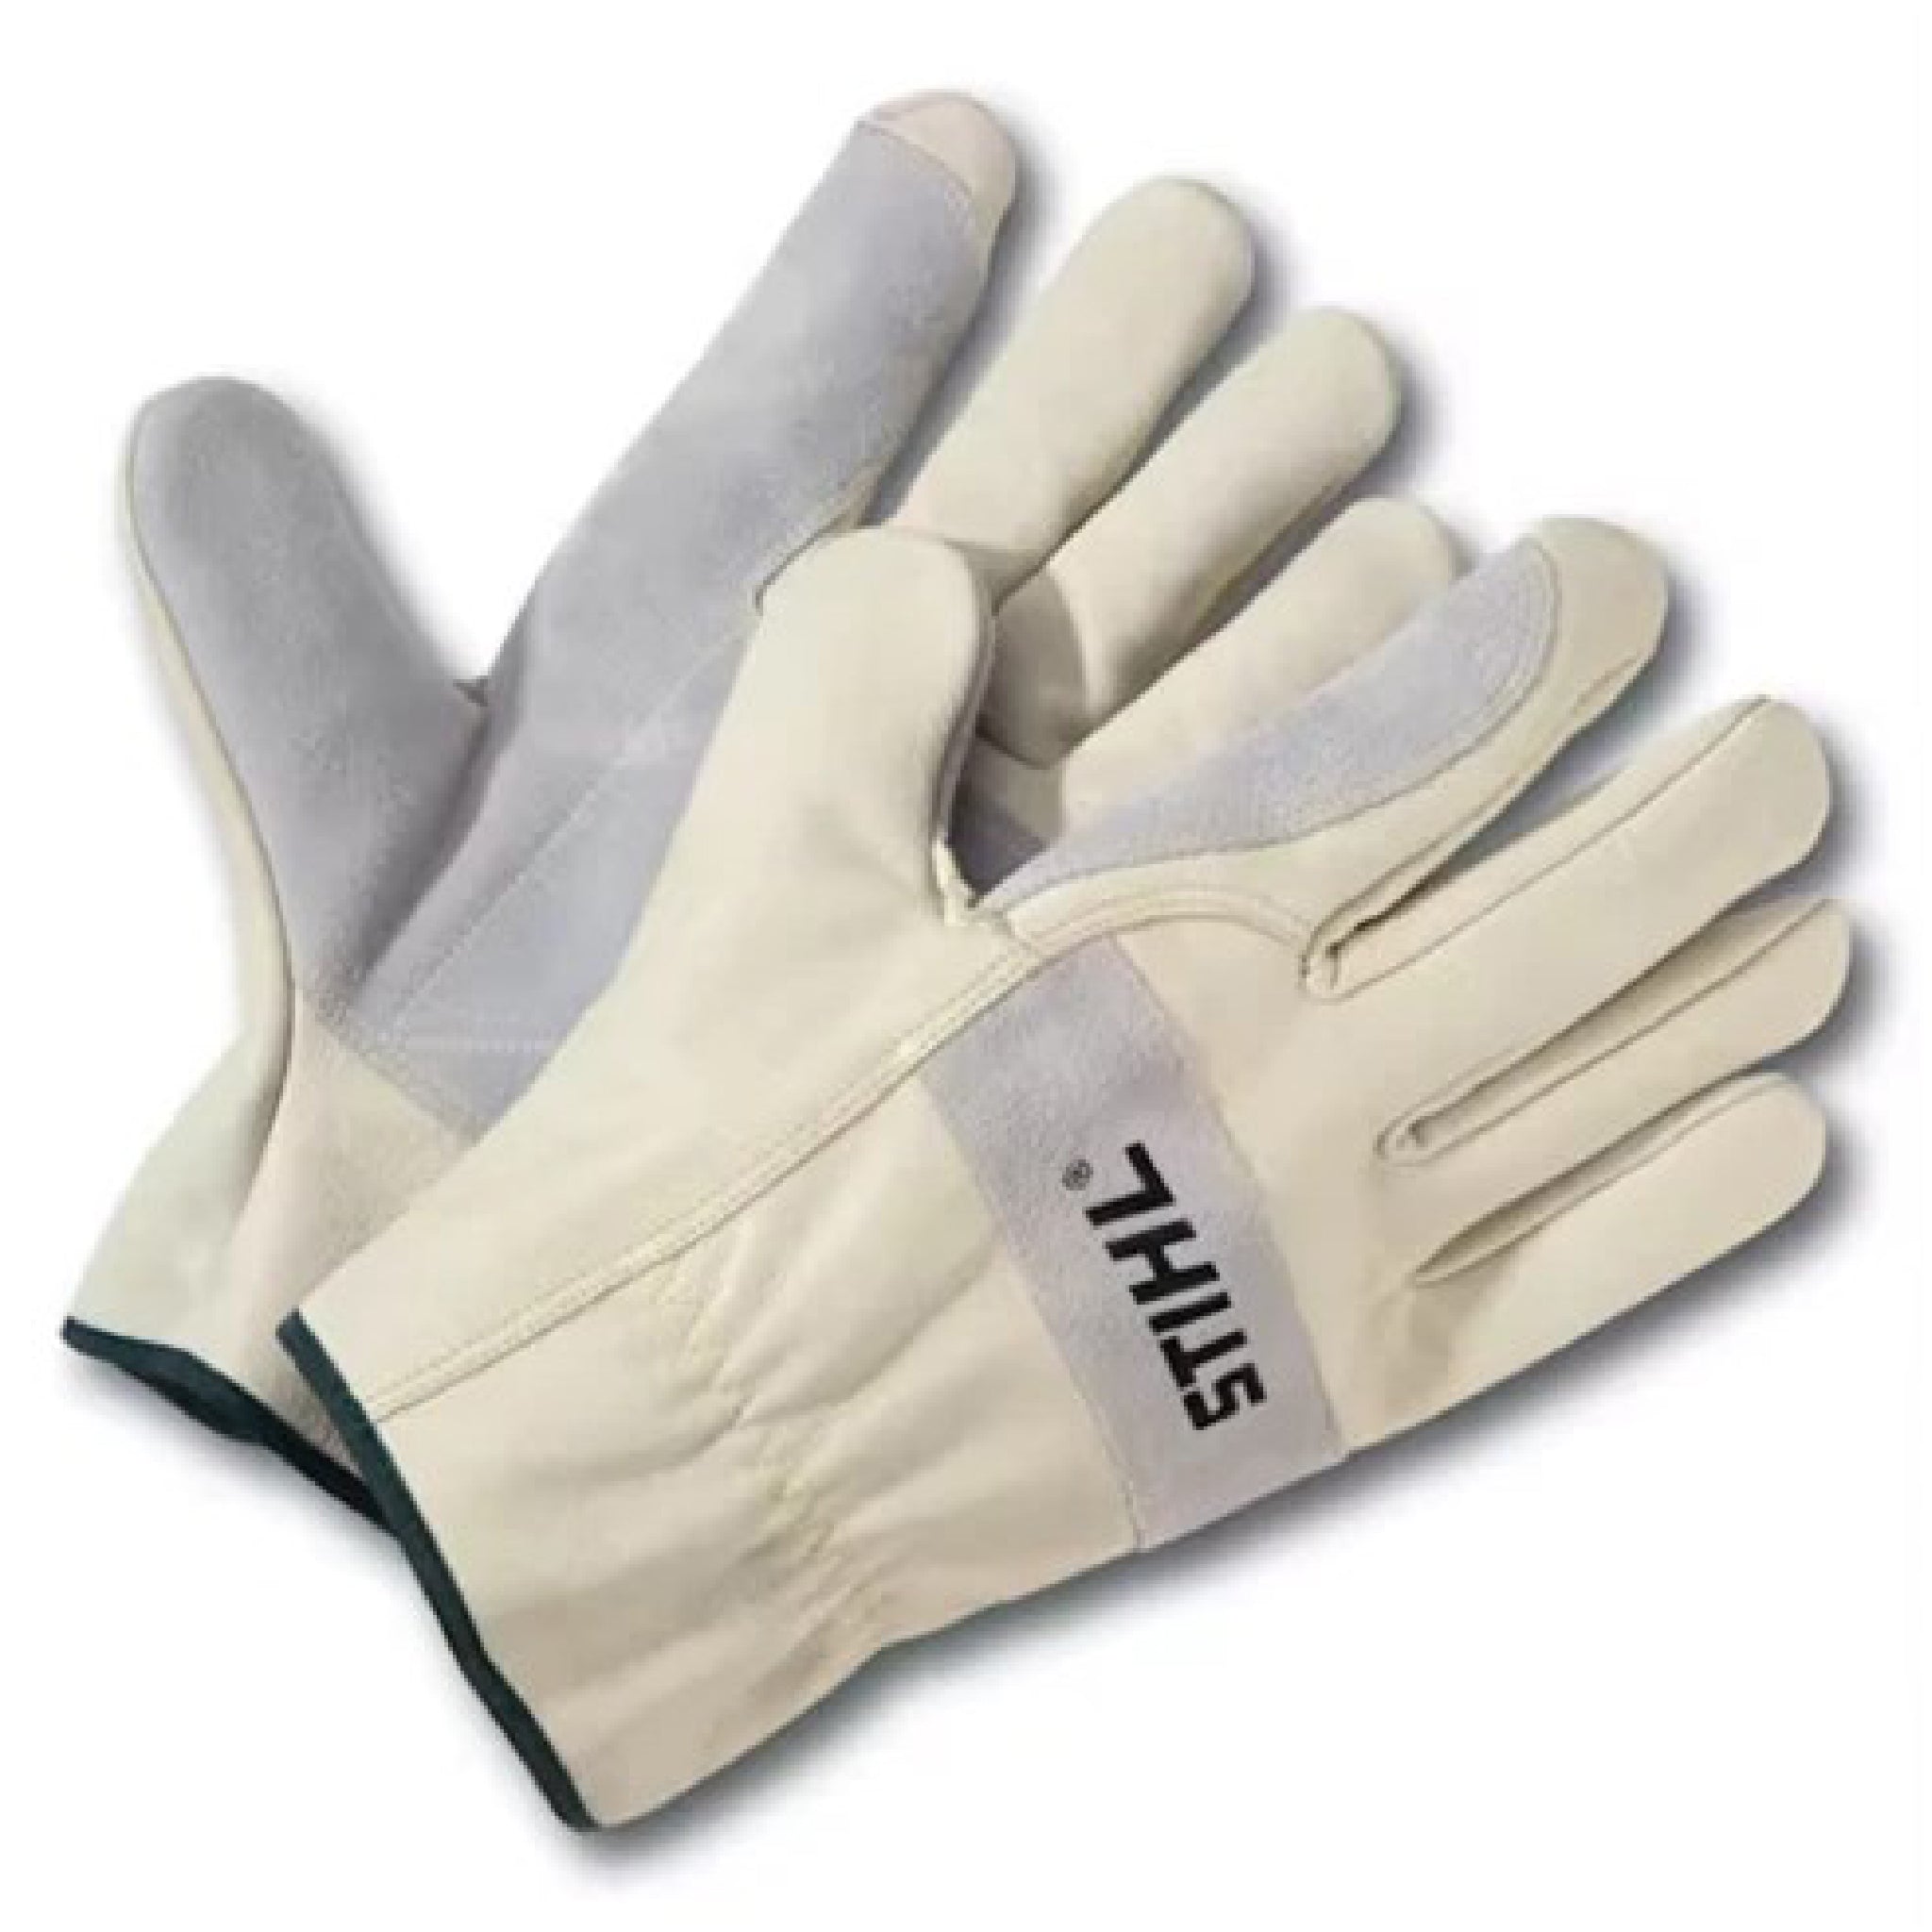 Stihl Value PRO Gloves